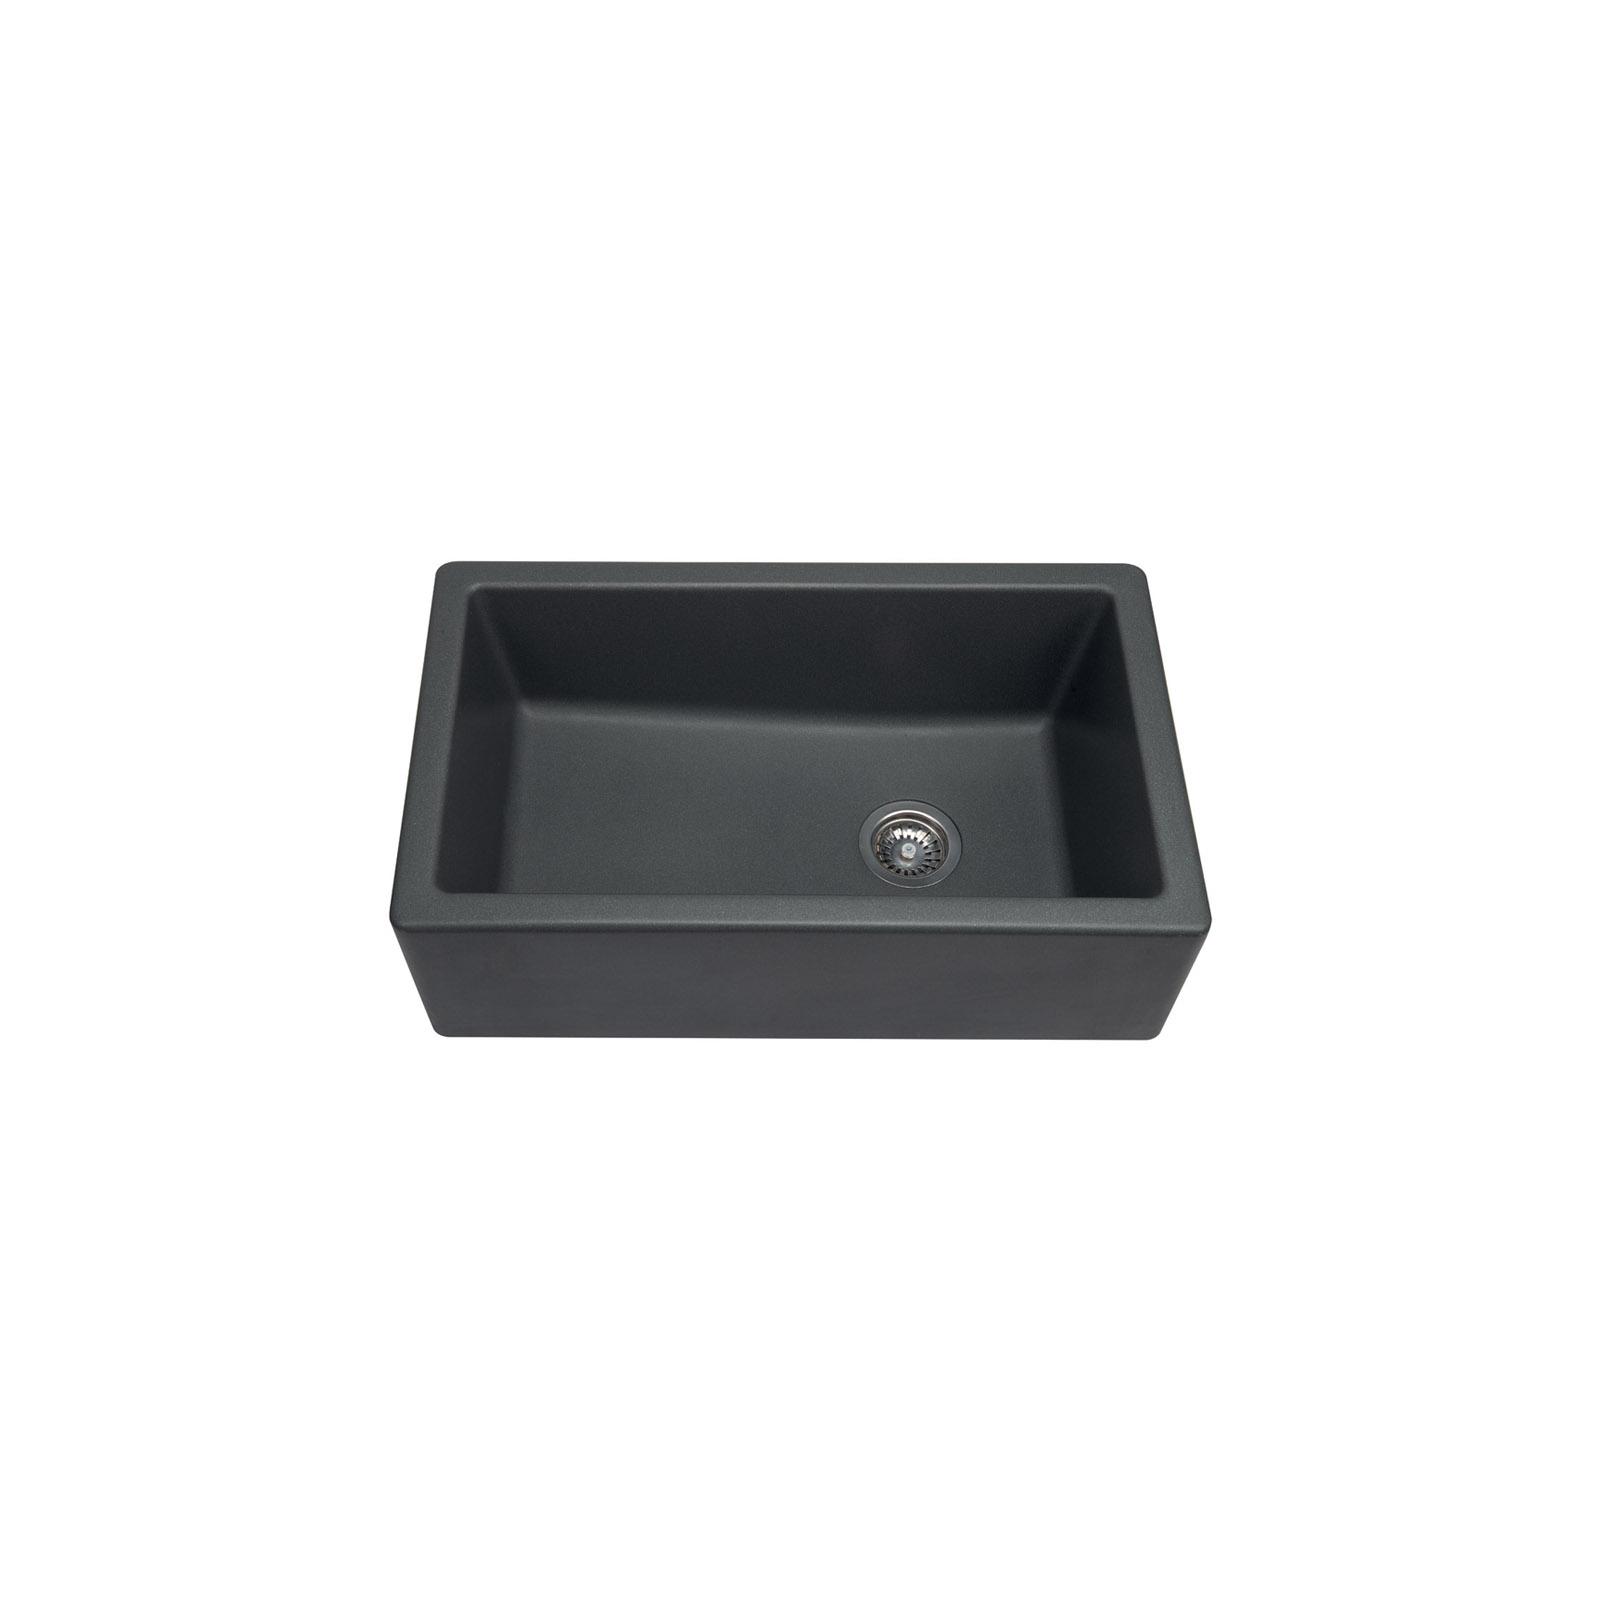 High-quality sink Philippe II granit gray titanium - one bowl